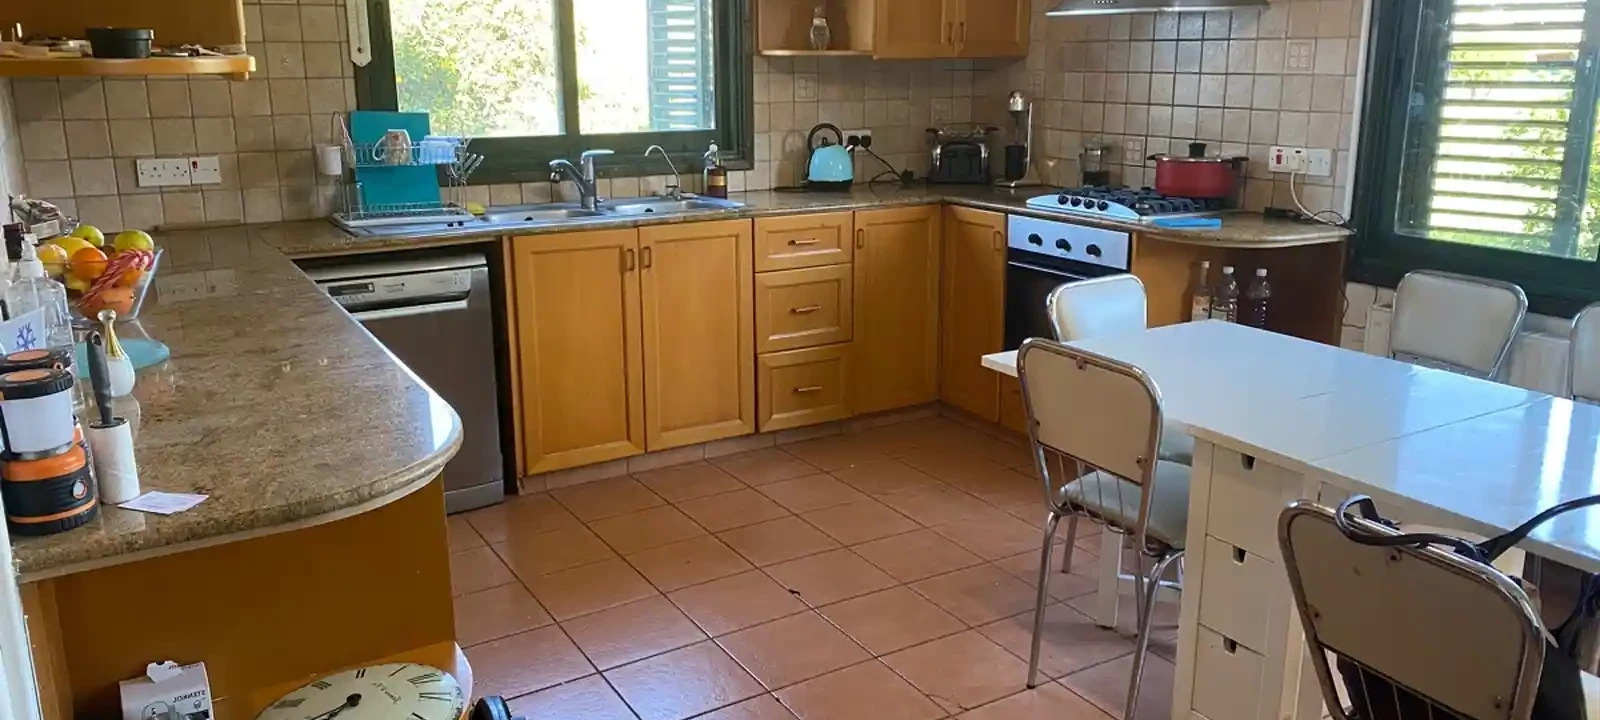 3-bedroom detached house to rent €1.200, image 1